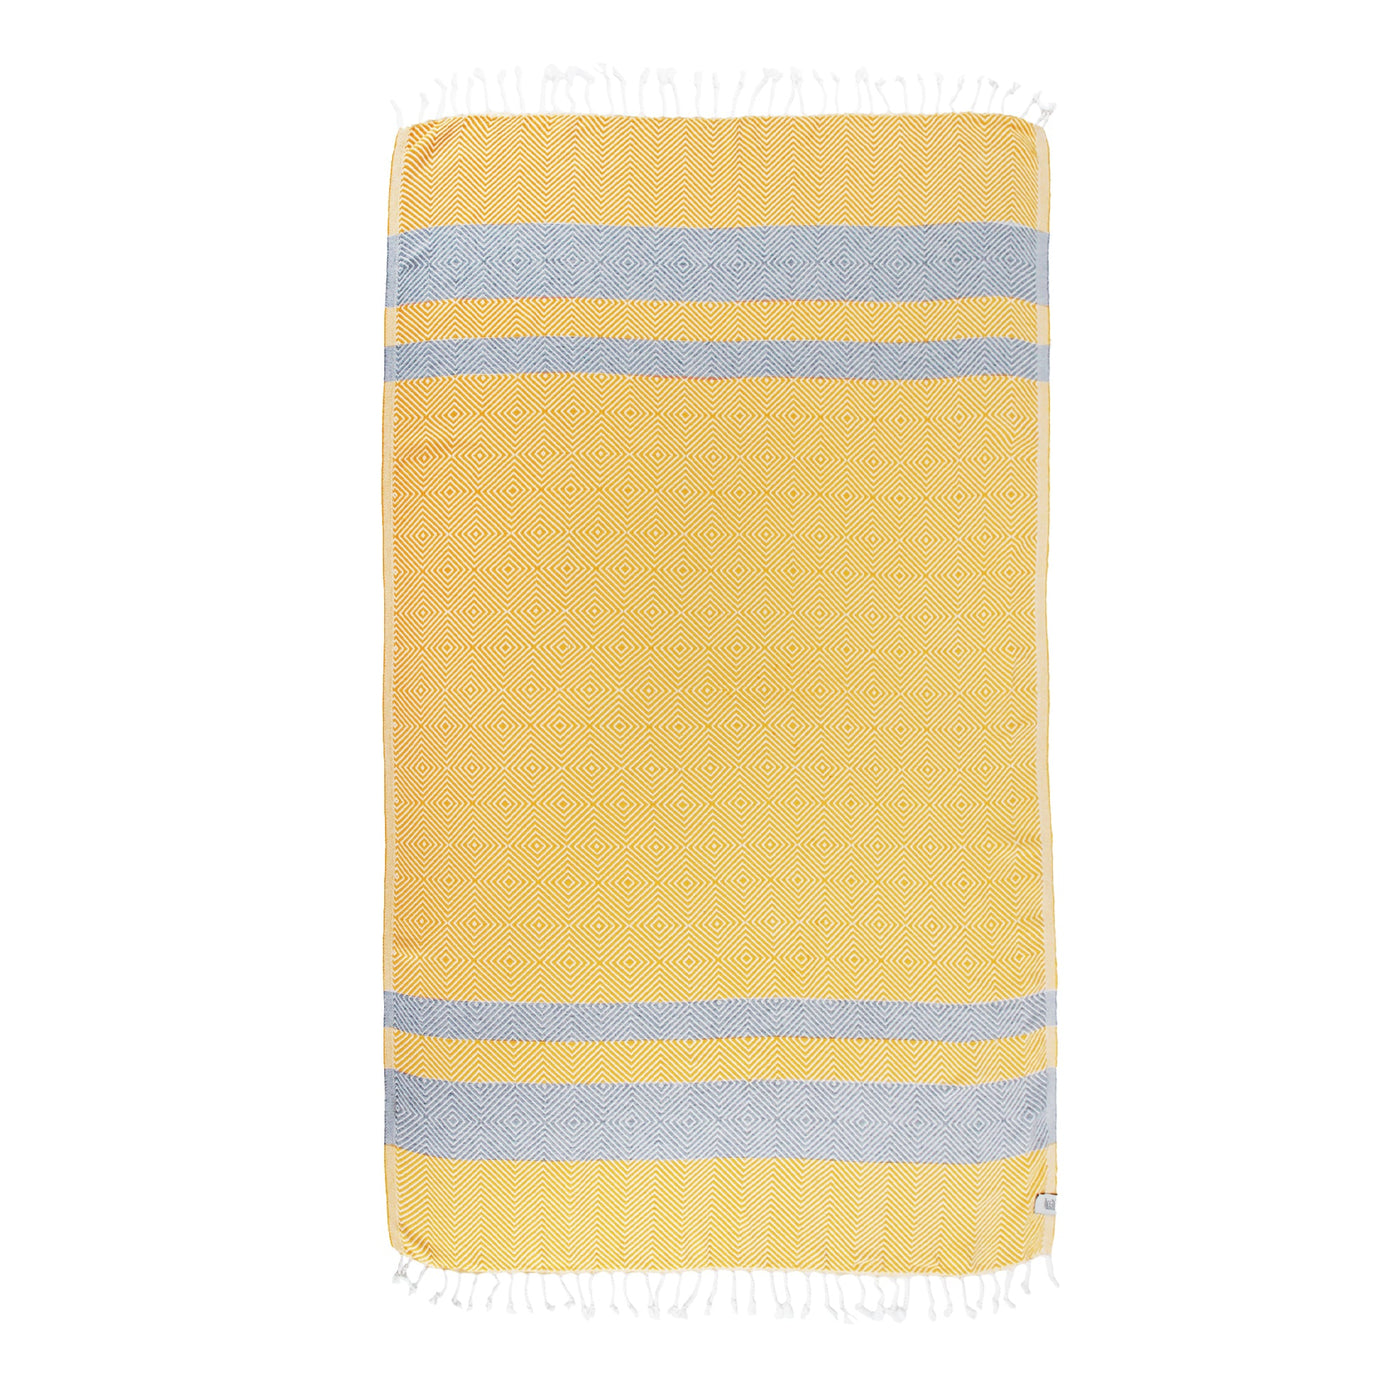 New Design Beach Towel by La'Hammam